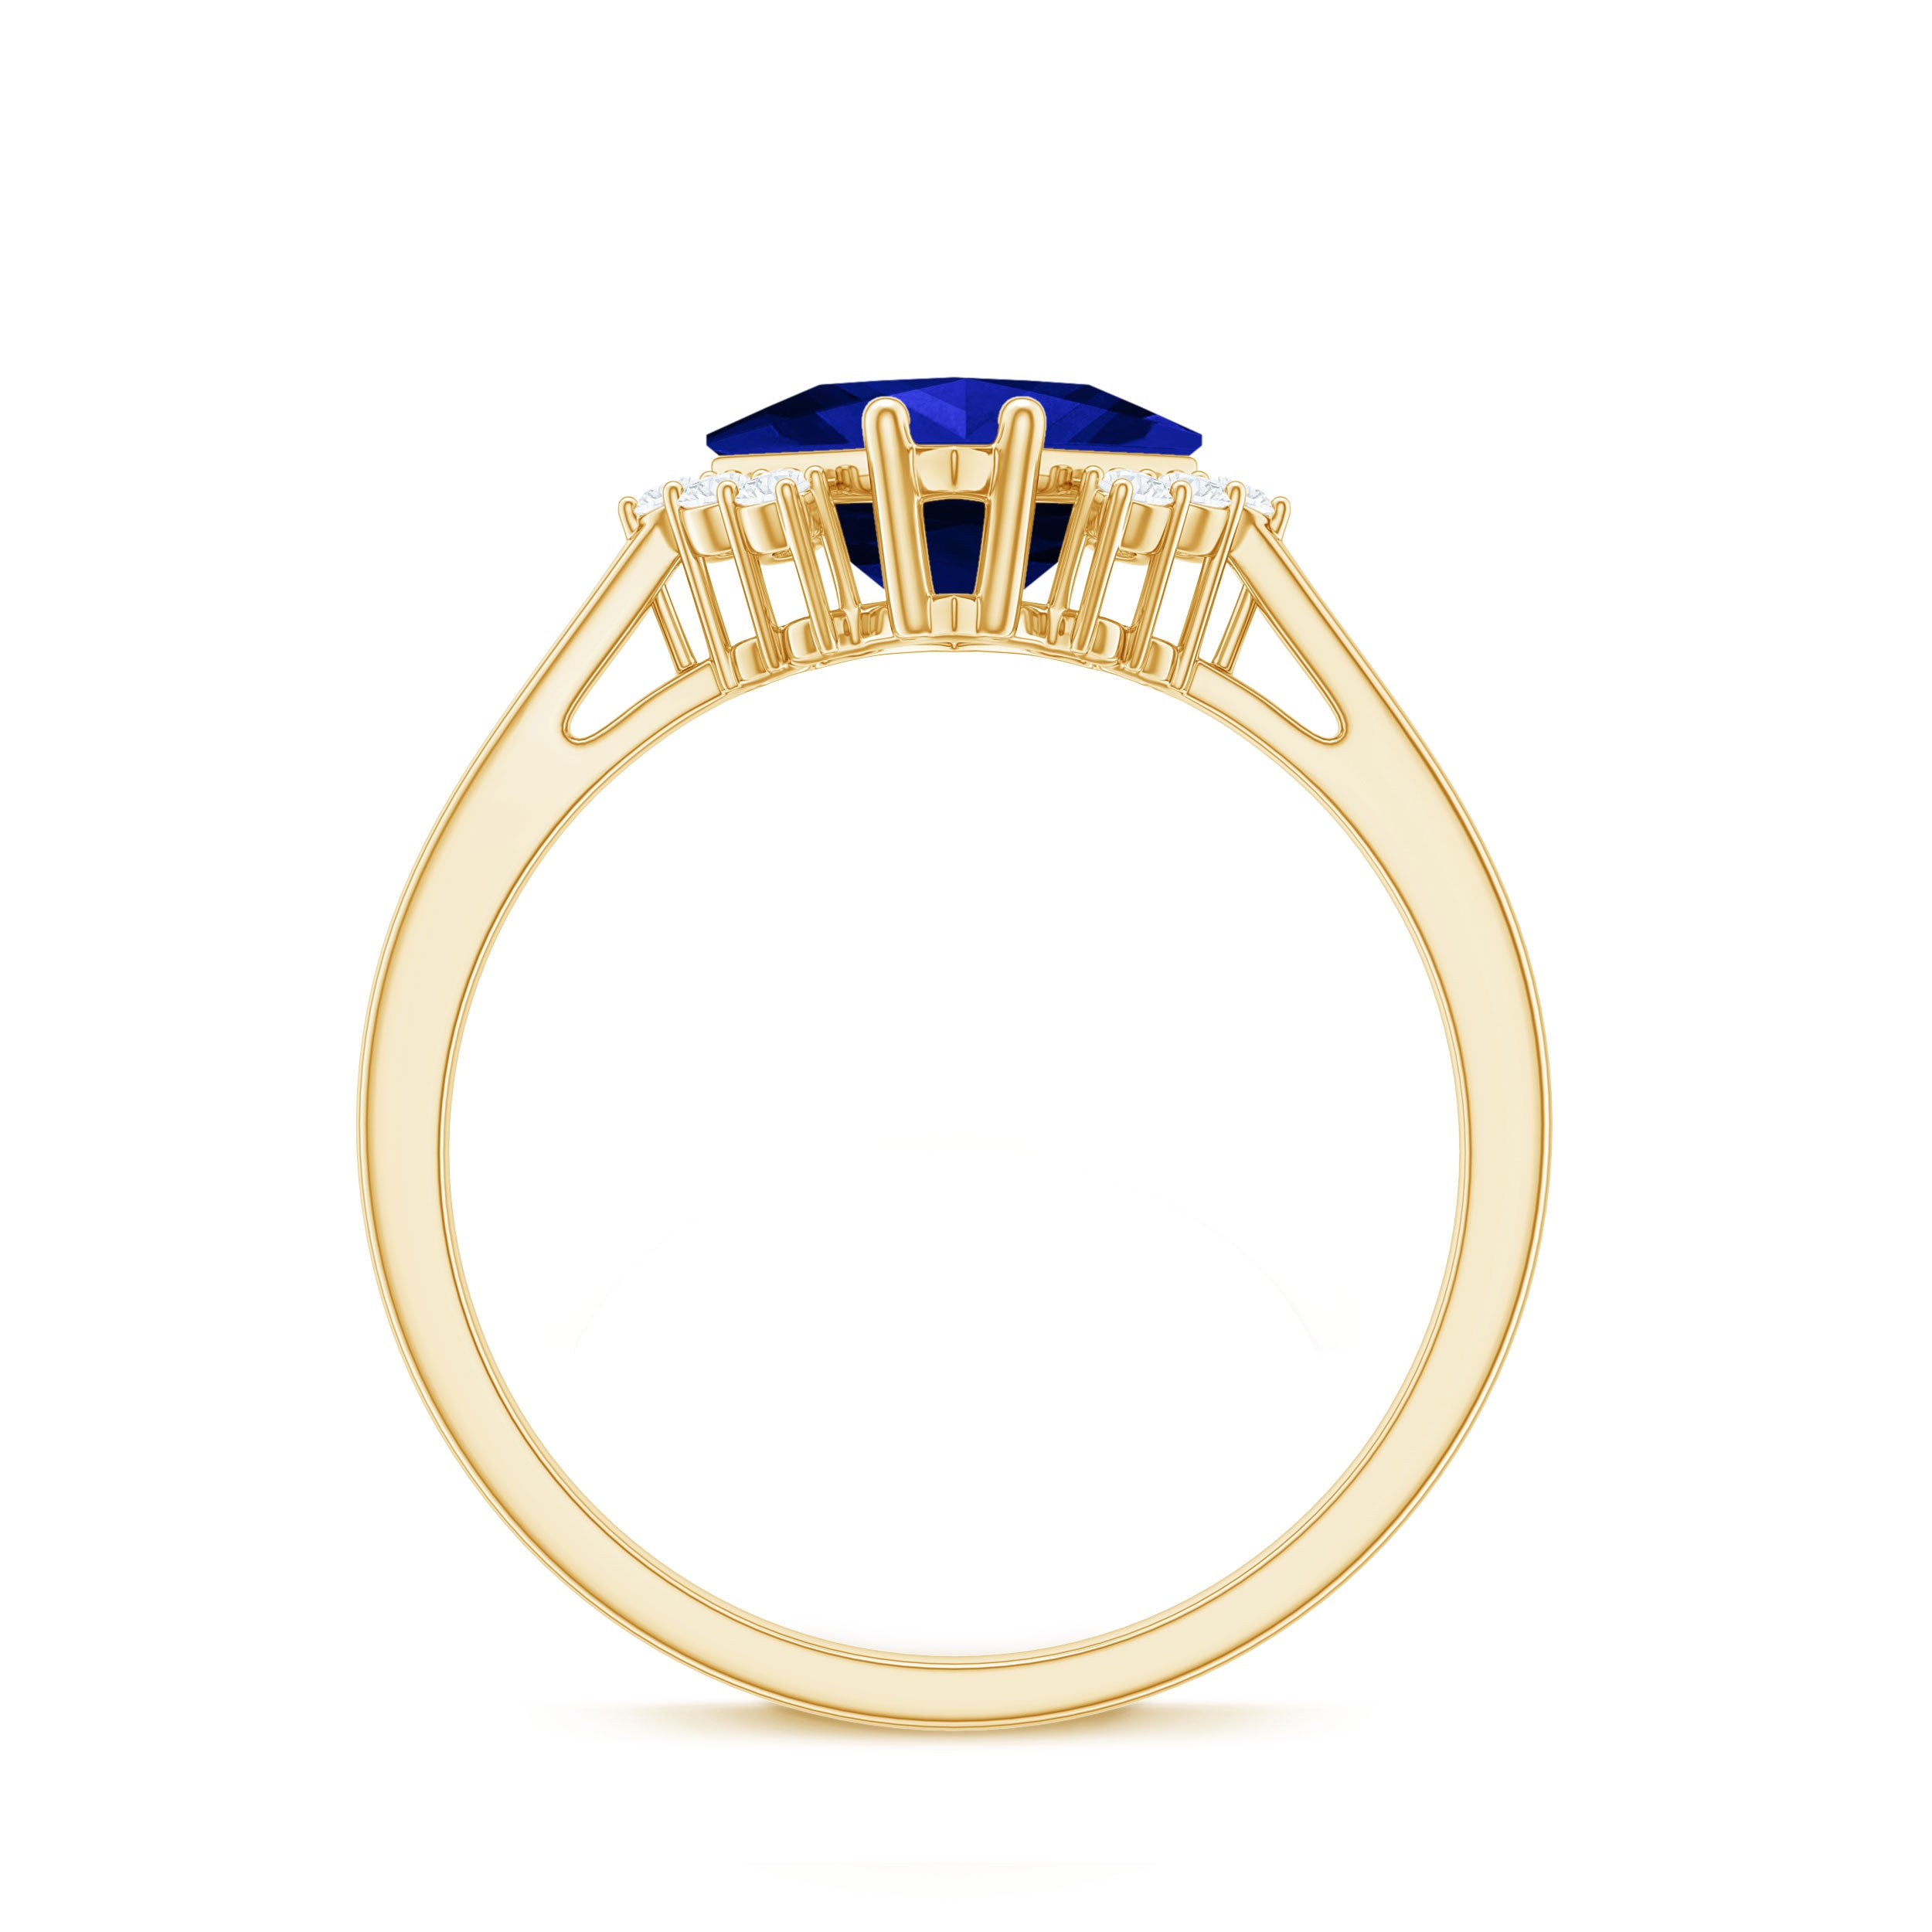 Princess Cut Created Blue Sapphire Engagement Ring with Diamond Accent Lab Created Blue Sapphire - ( AAAA ) - Quality - Rosec Jewels